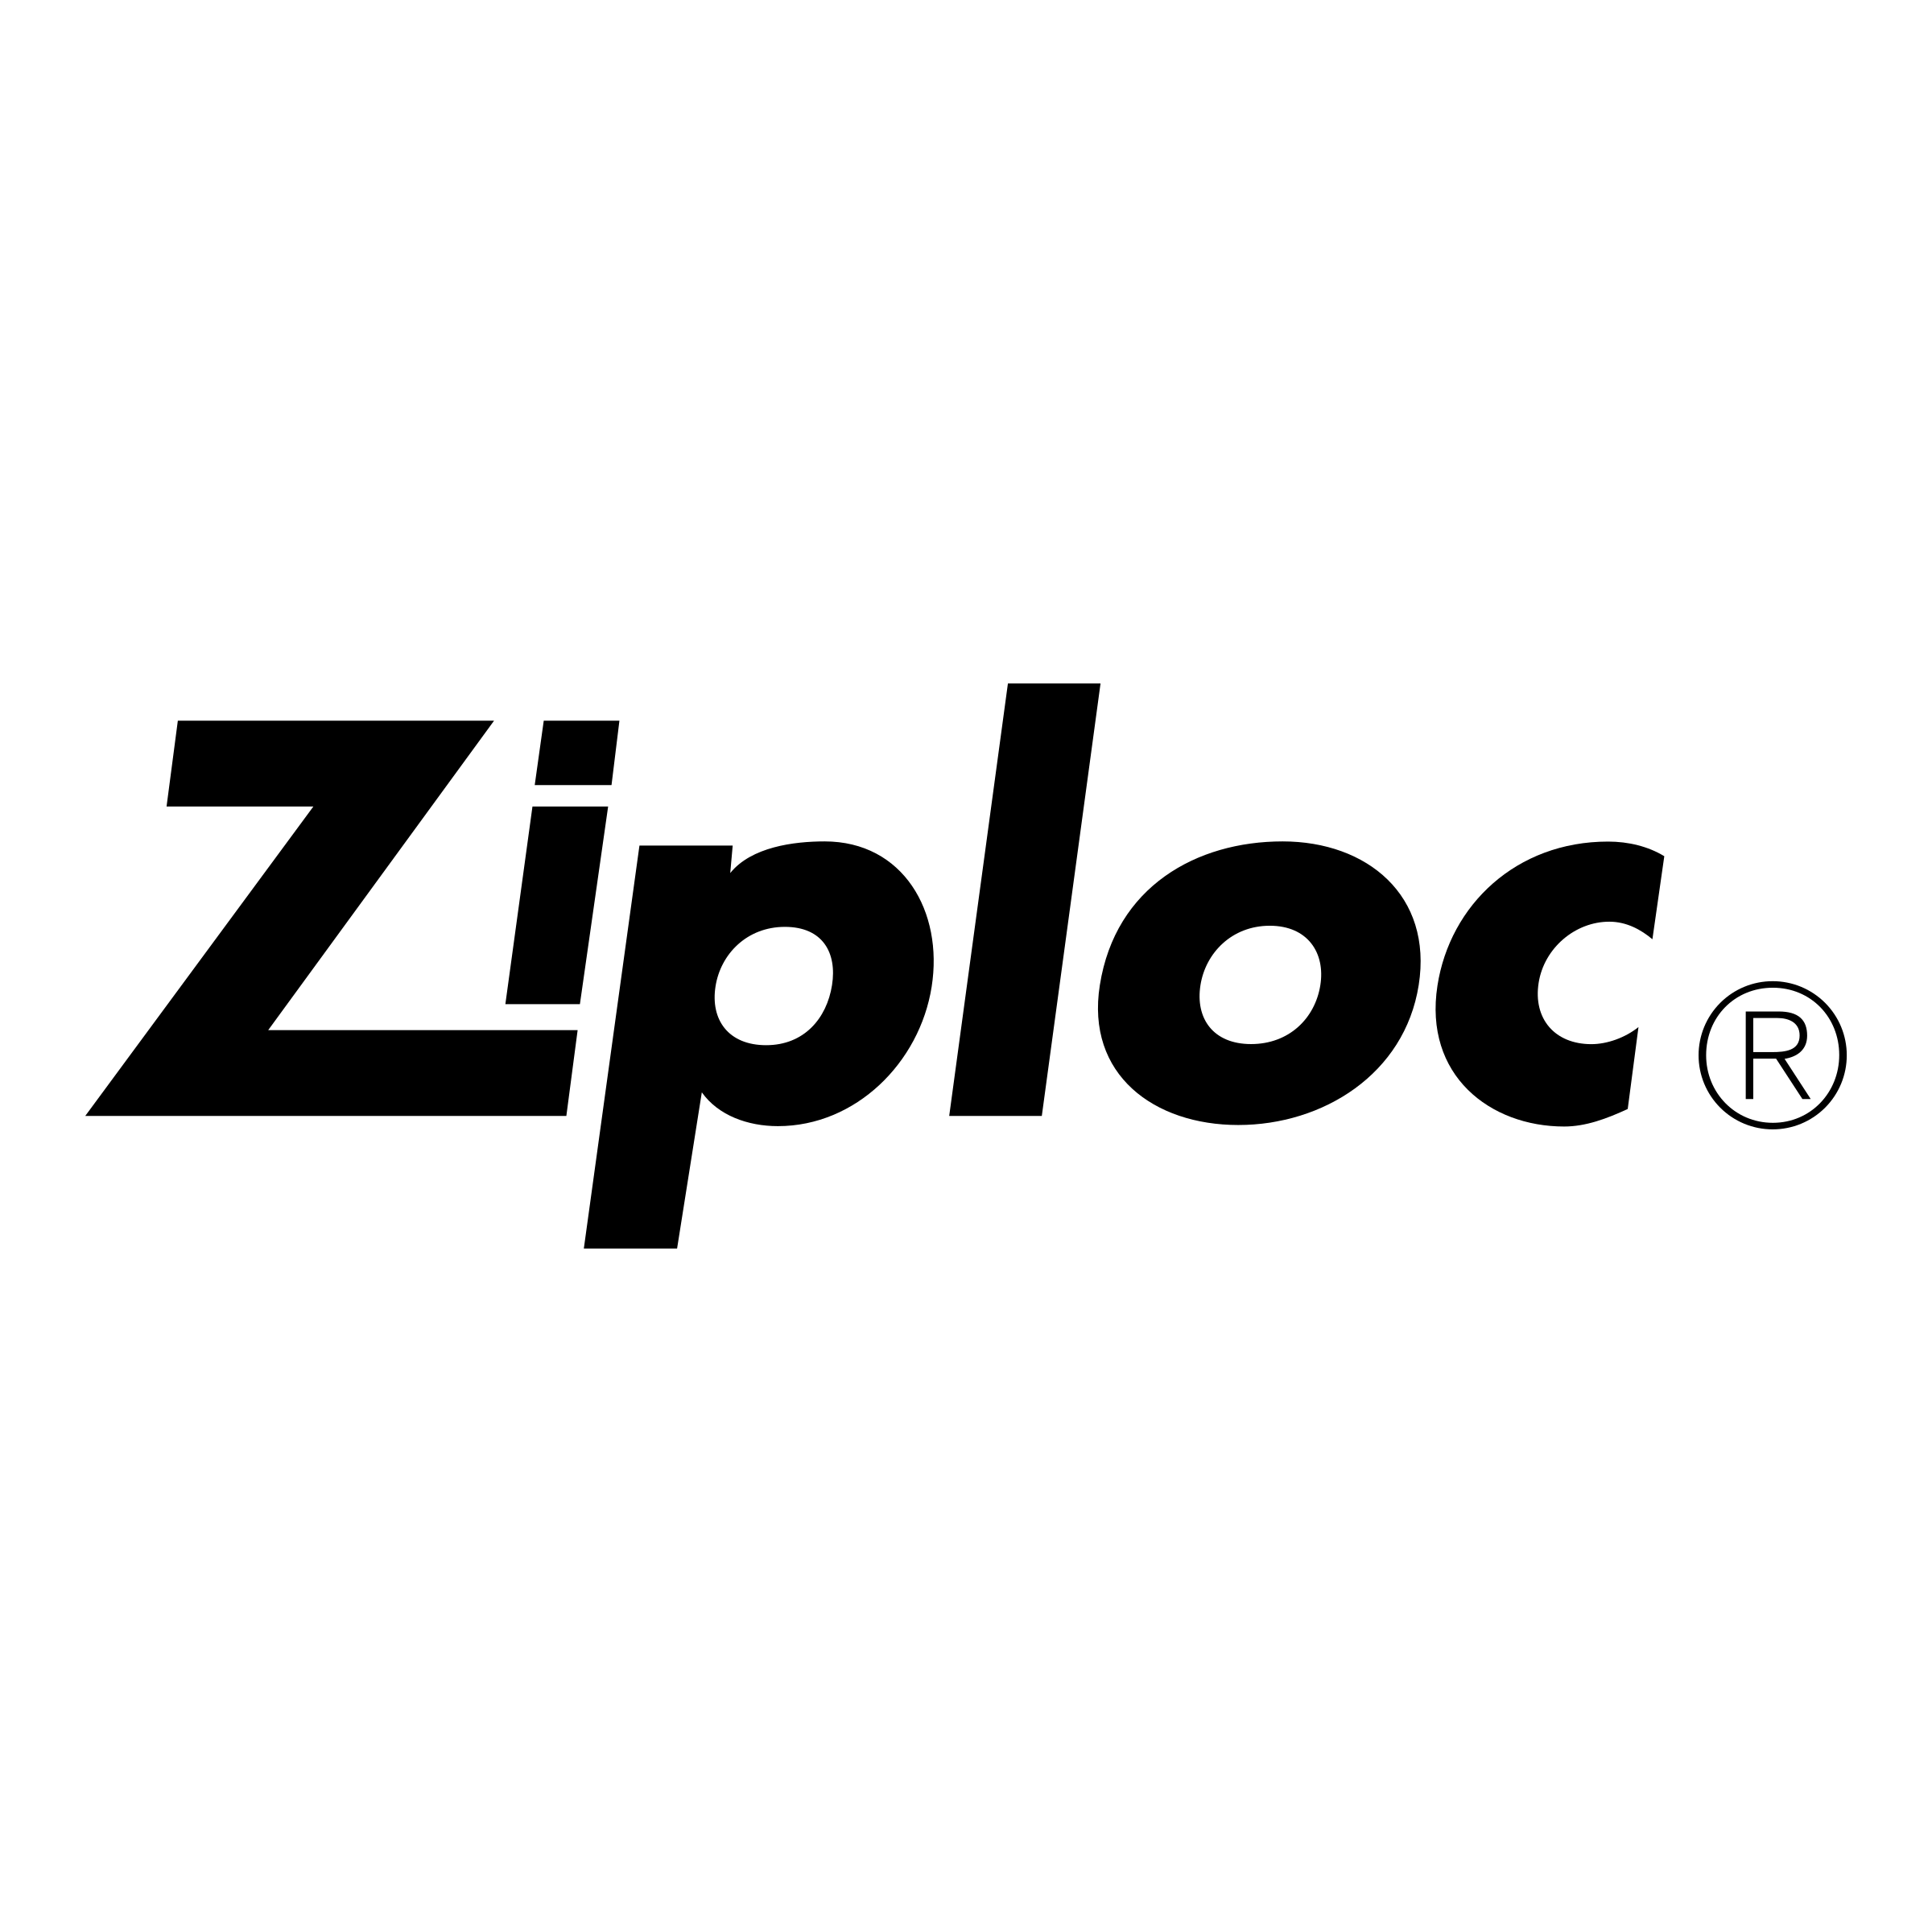 Ziploc Logo - Ziploc Logo PNG Transparent & SVG Vector - Freebie Supply